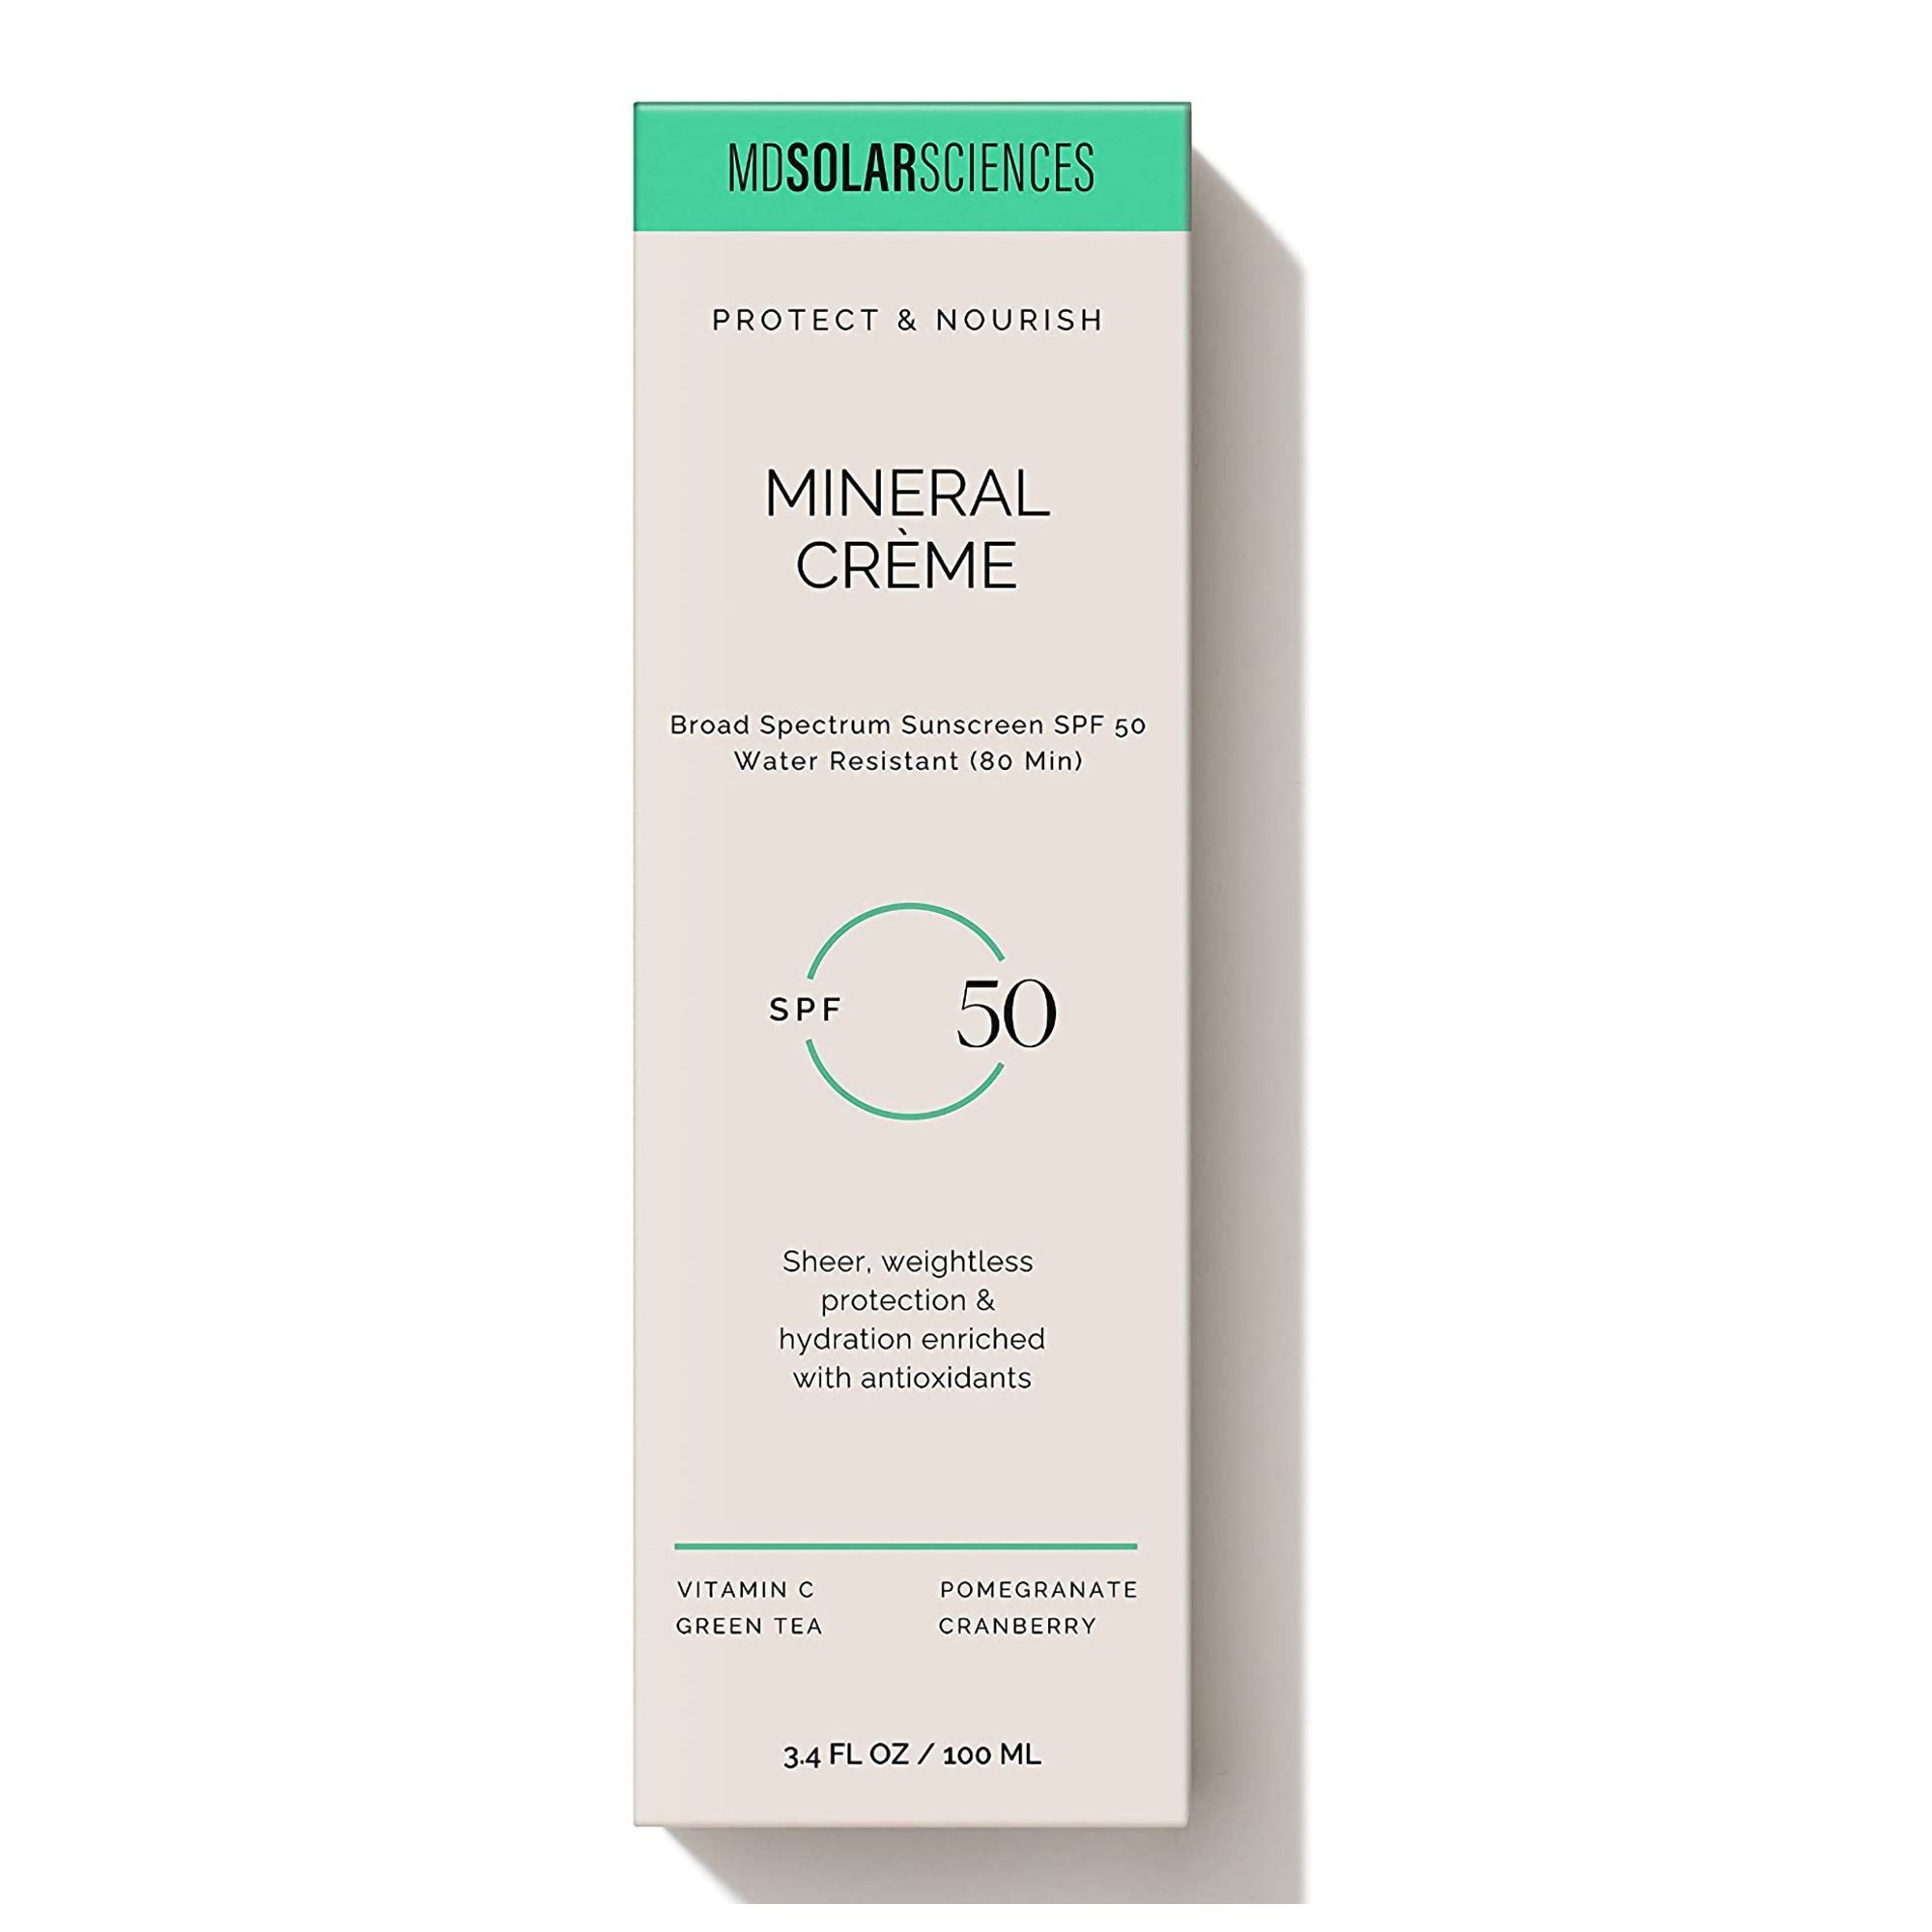 MDSolarSciences Mineral Crème, SPF 50 - 3.4 oz